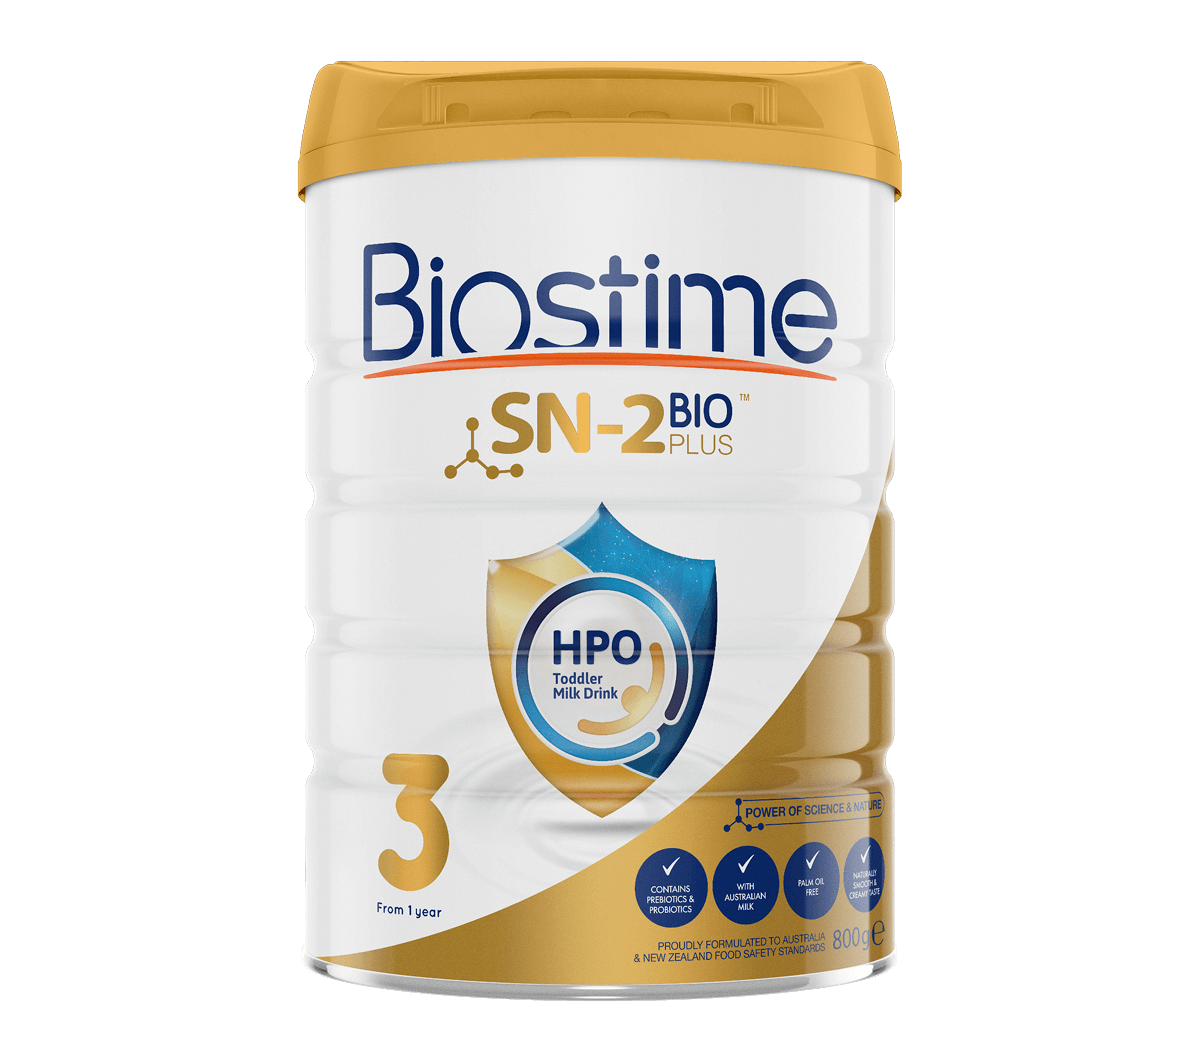 Biostime Probiotics with 2'‐FL (HMO) Full Prescribing Information